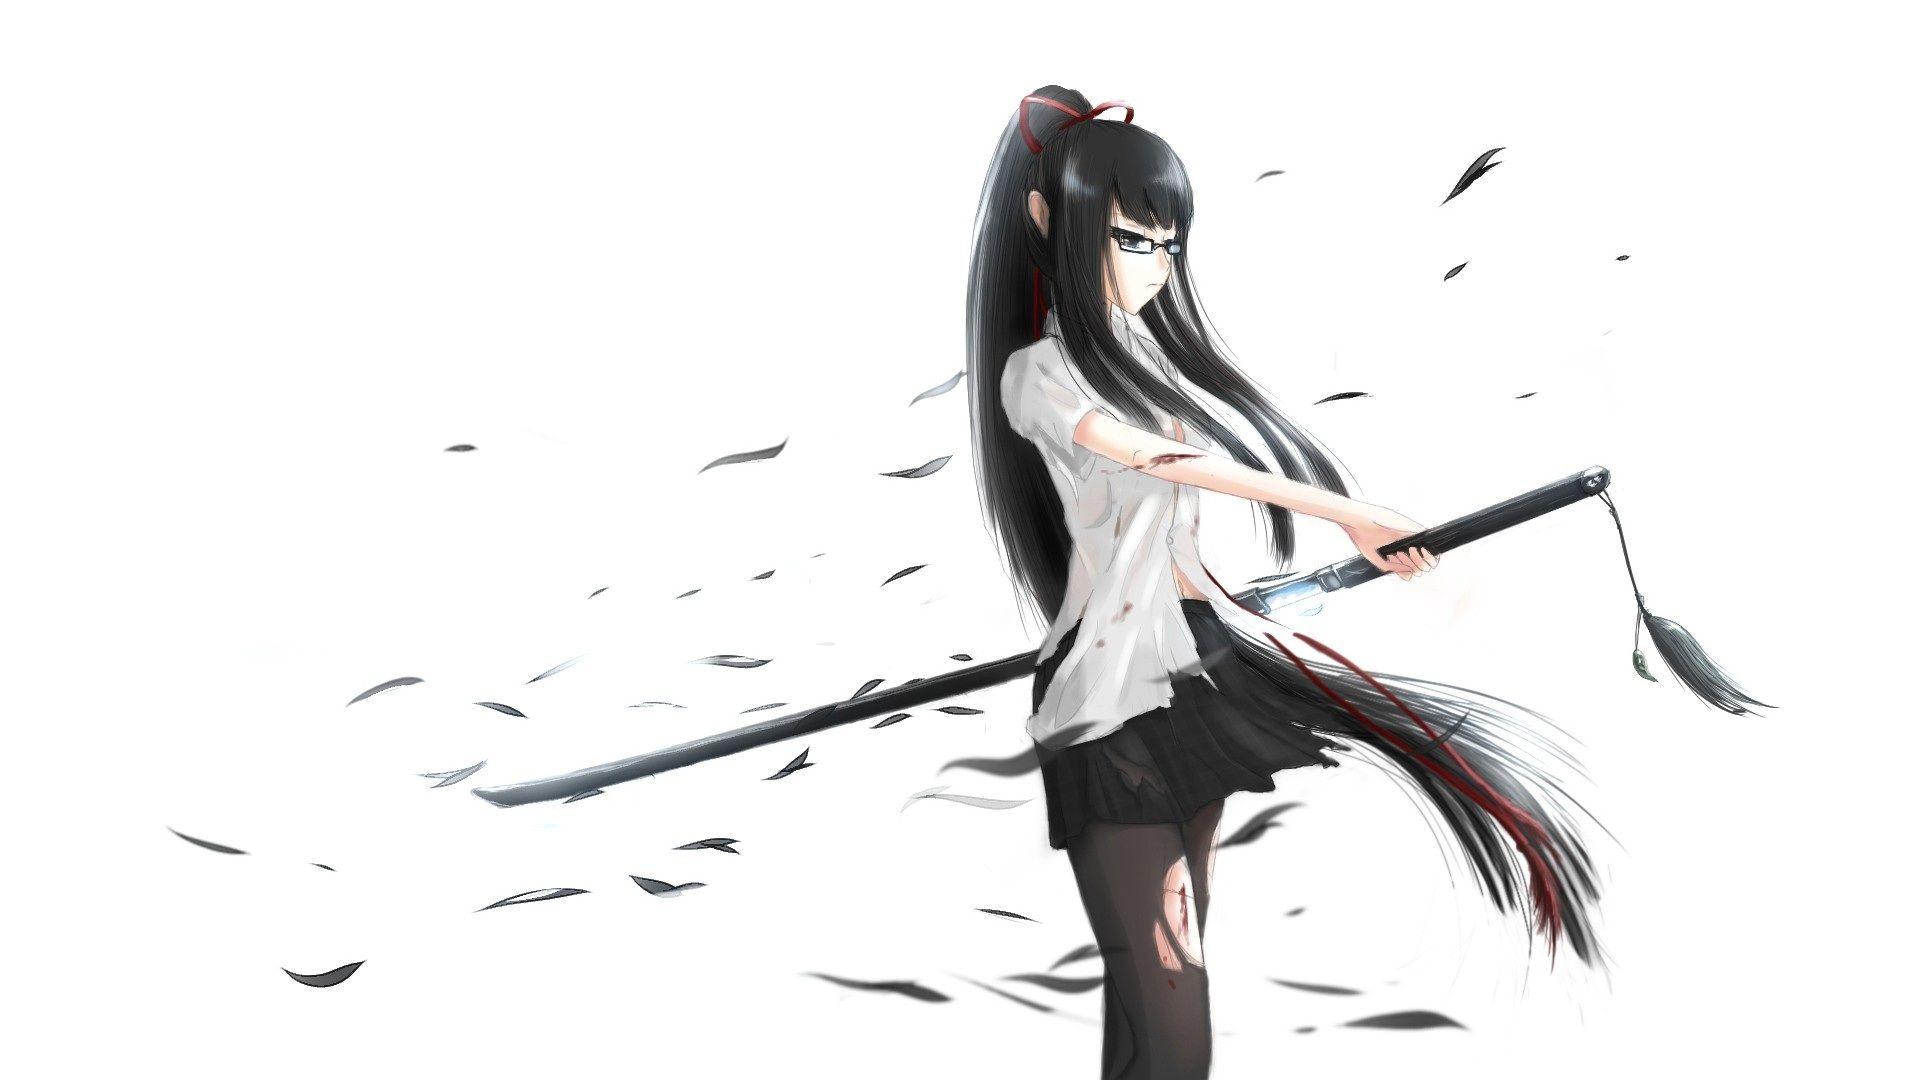 AI Art Generator: Female samurai with a blade made of ice. She has dark  leather armor.